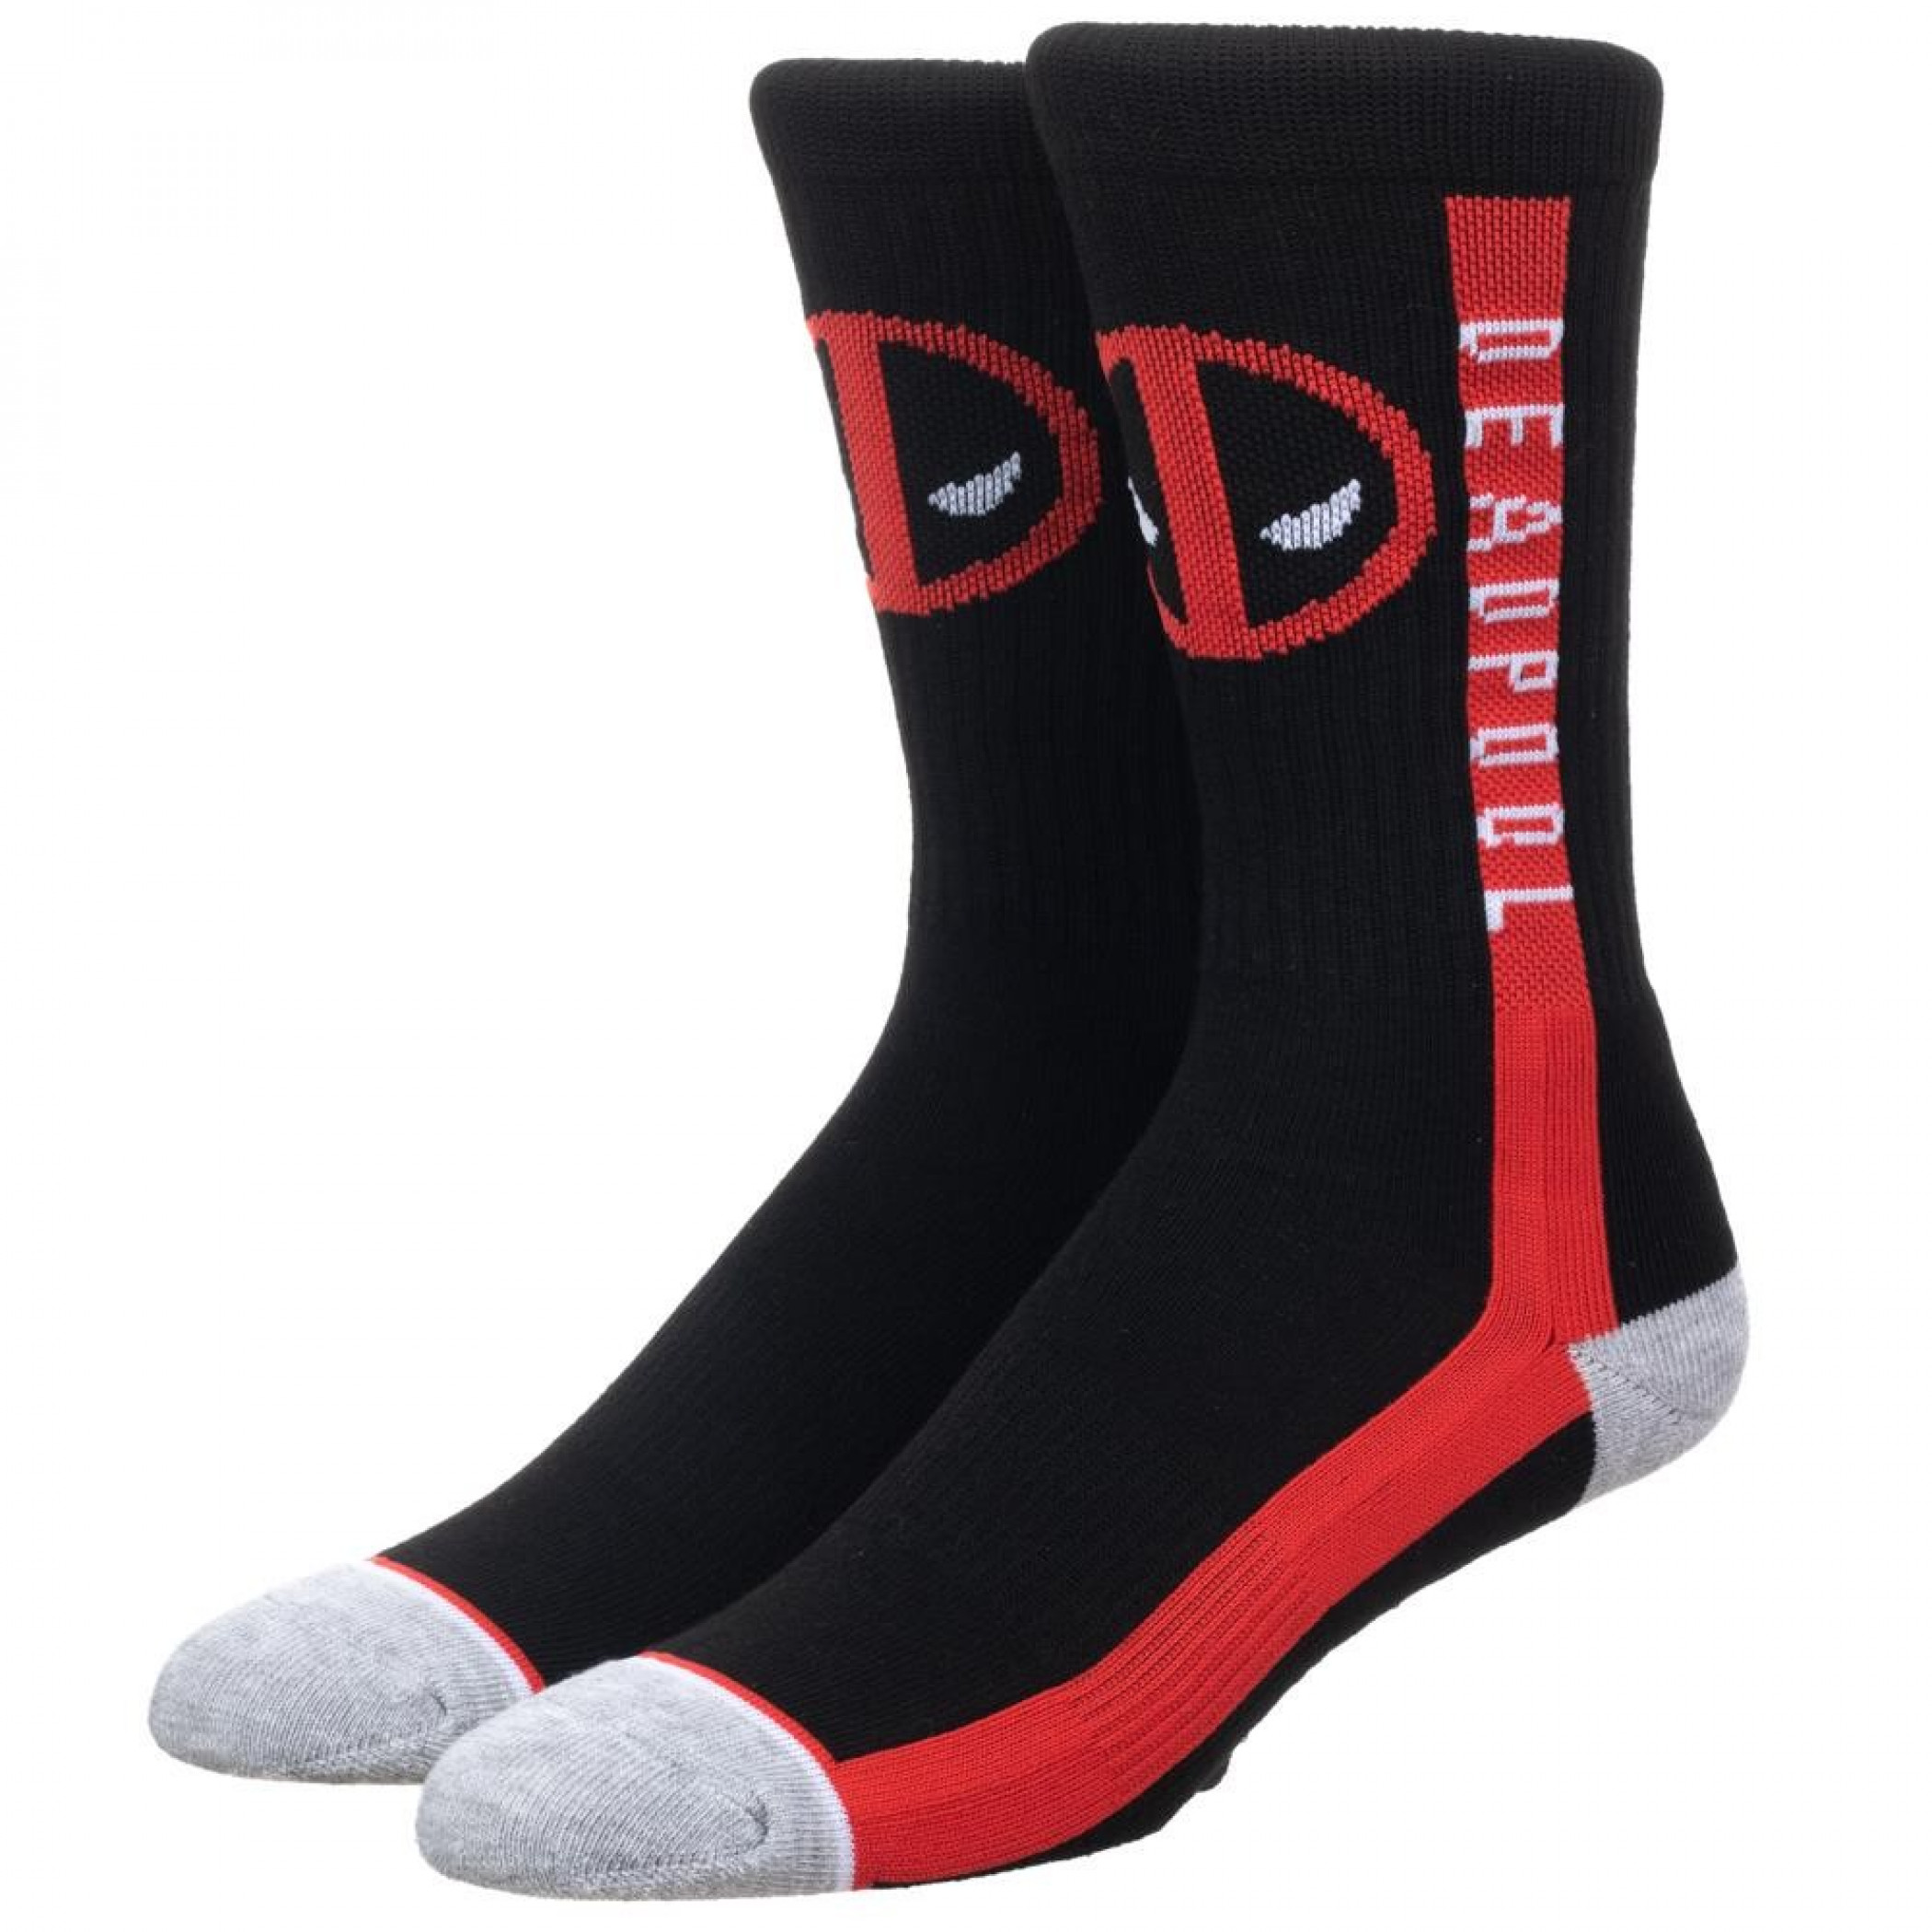 Deadpool Athletic Men's Crew Socks